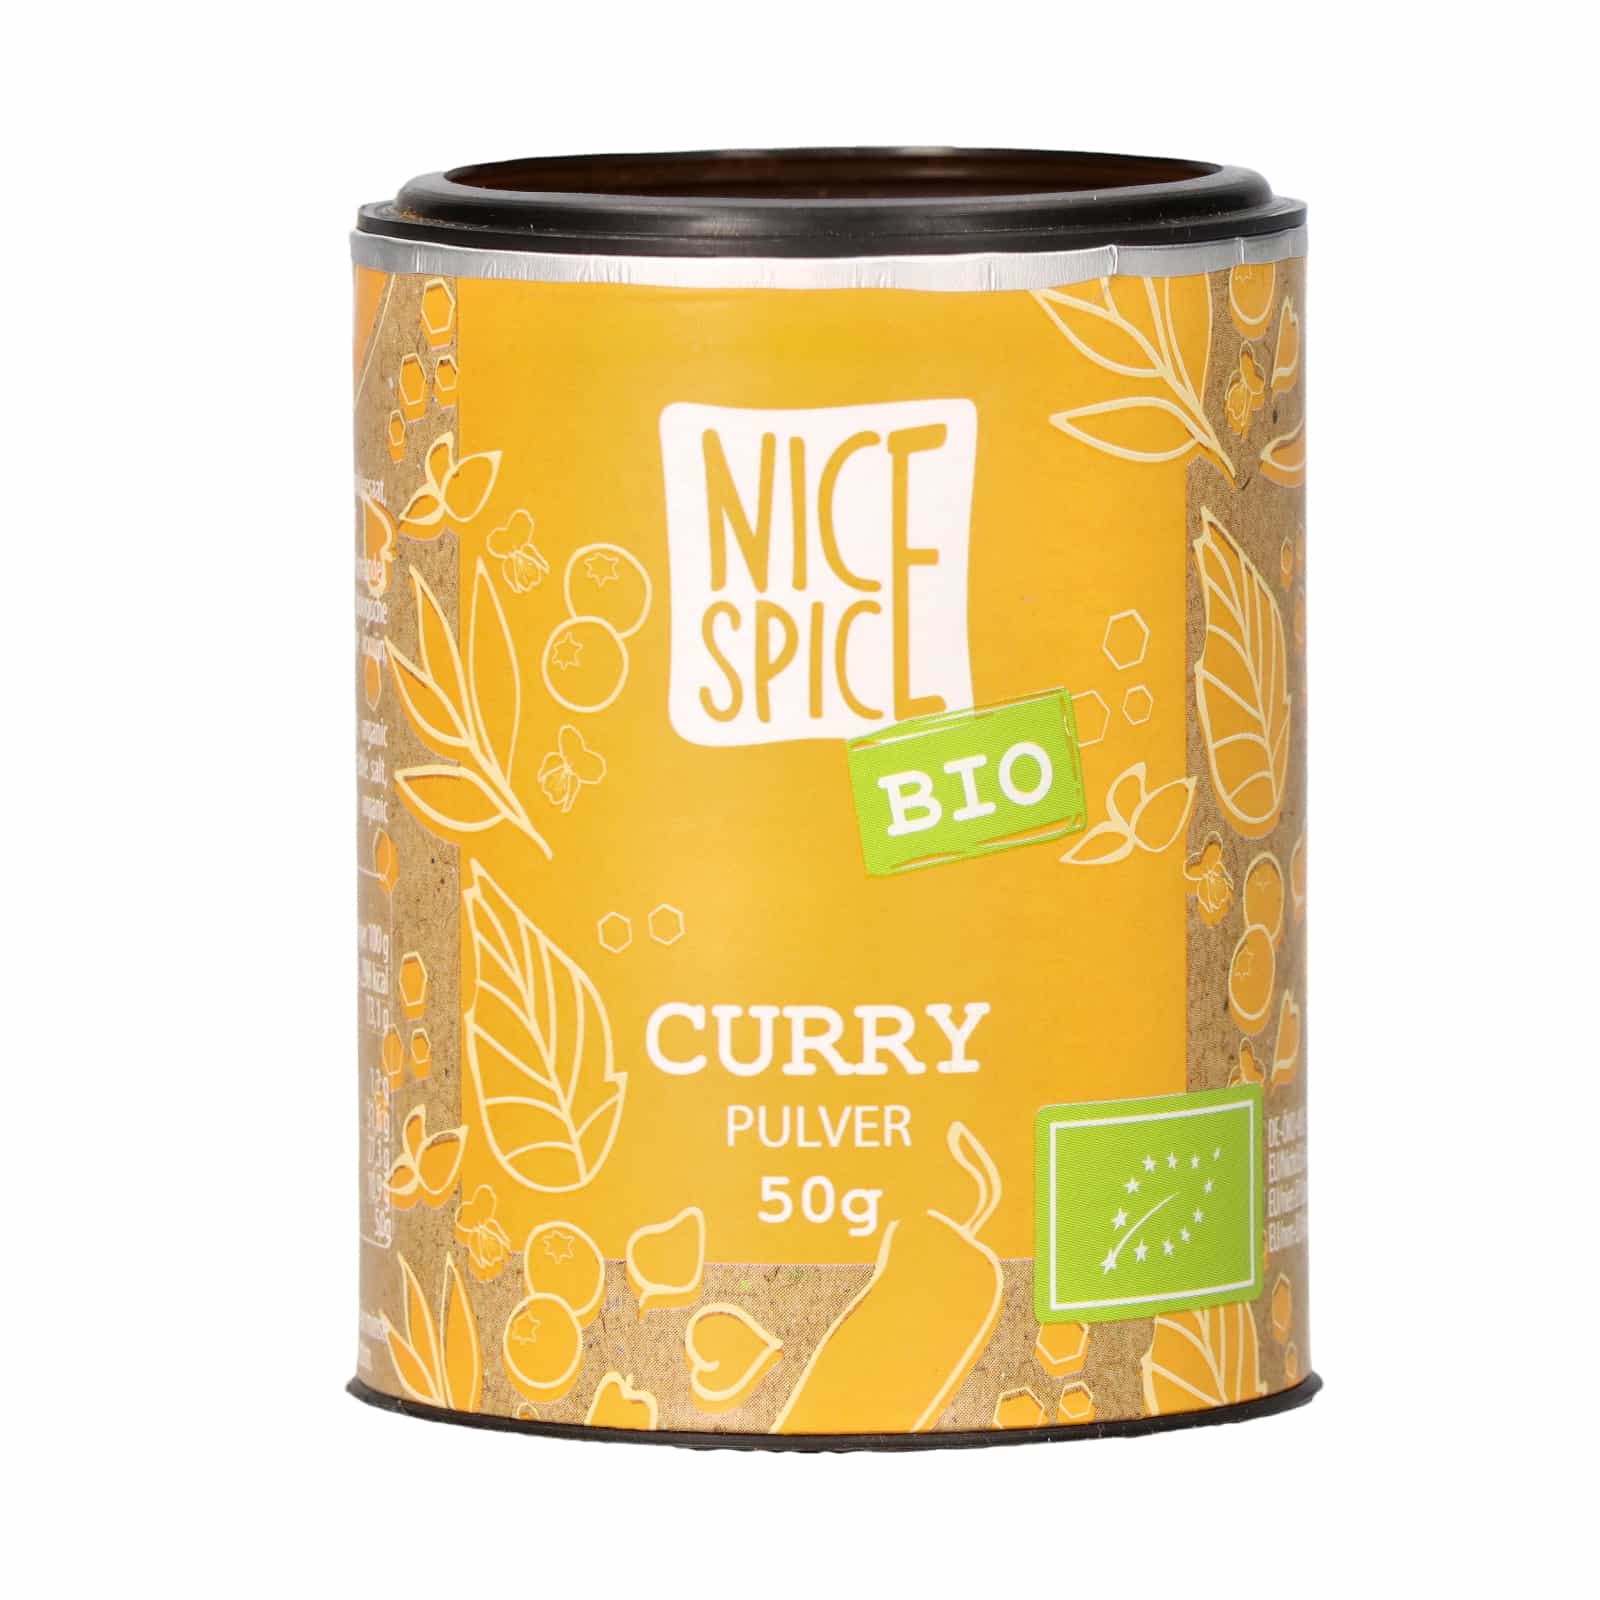 NICE SPICE BIO Curry 50g PWDS